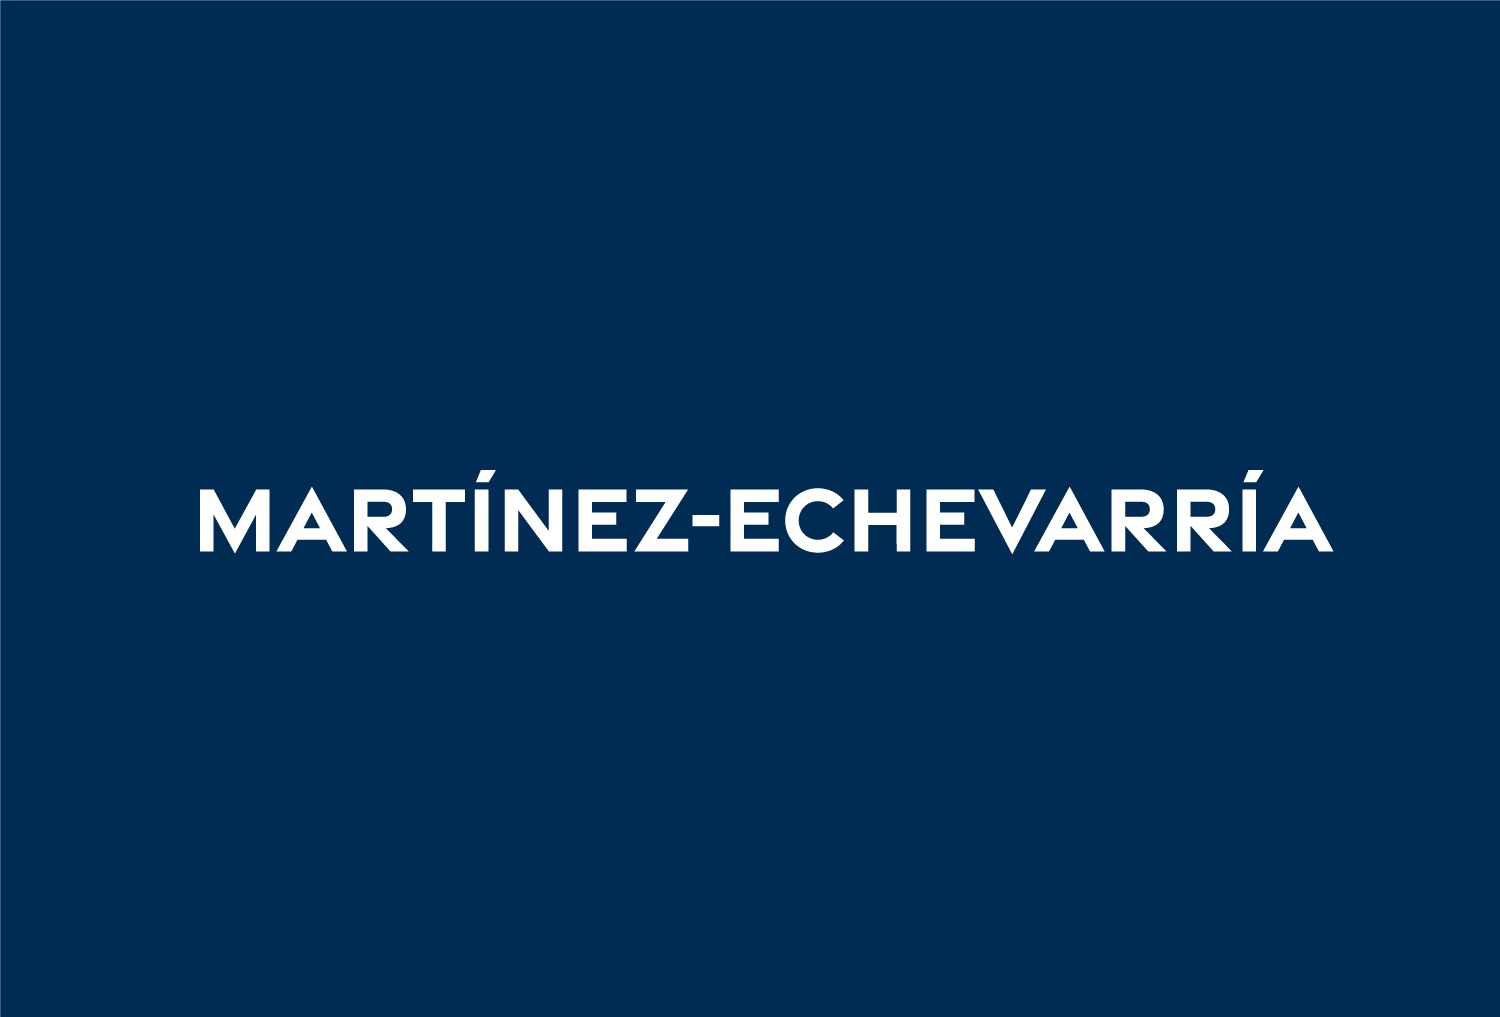 Martínez-Echevarría